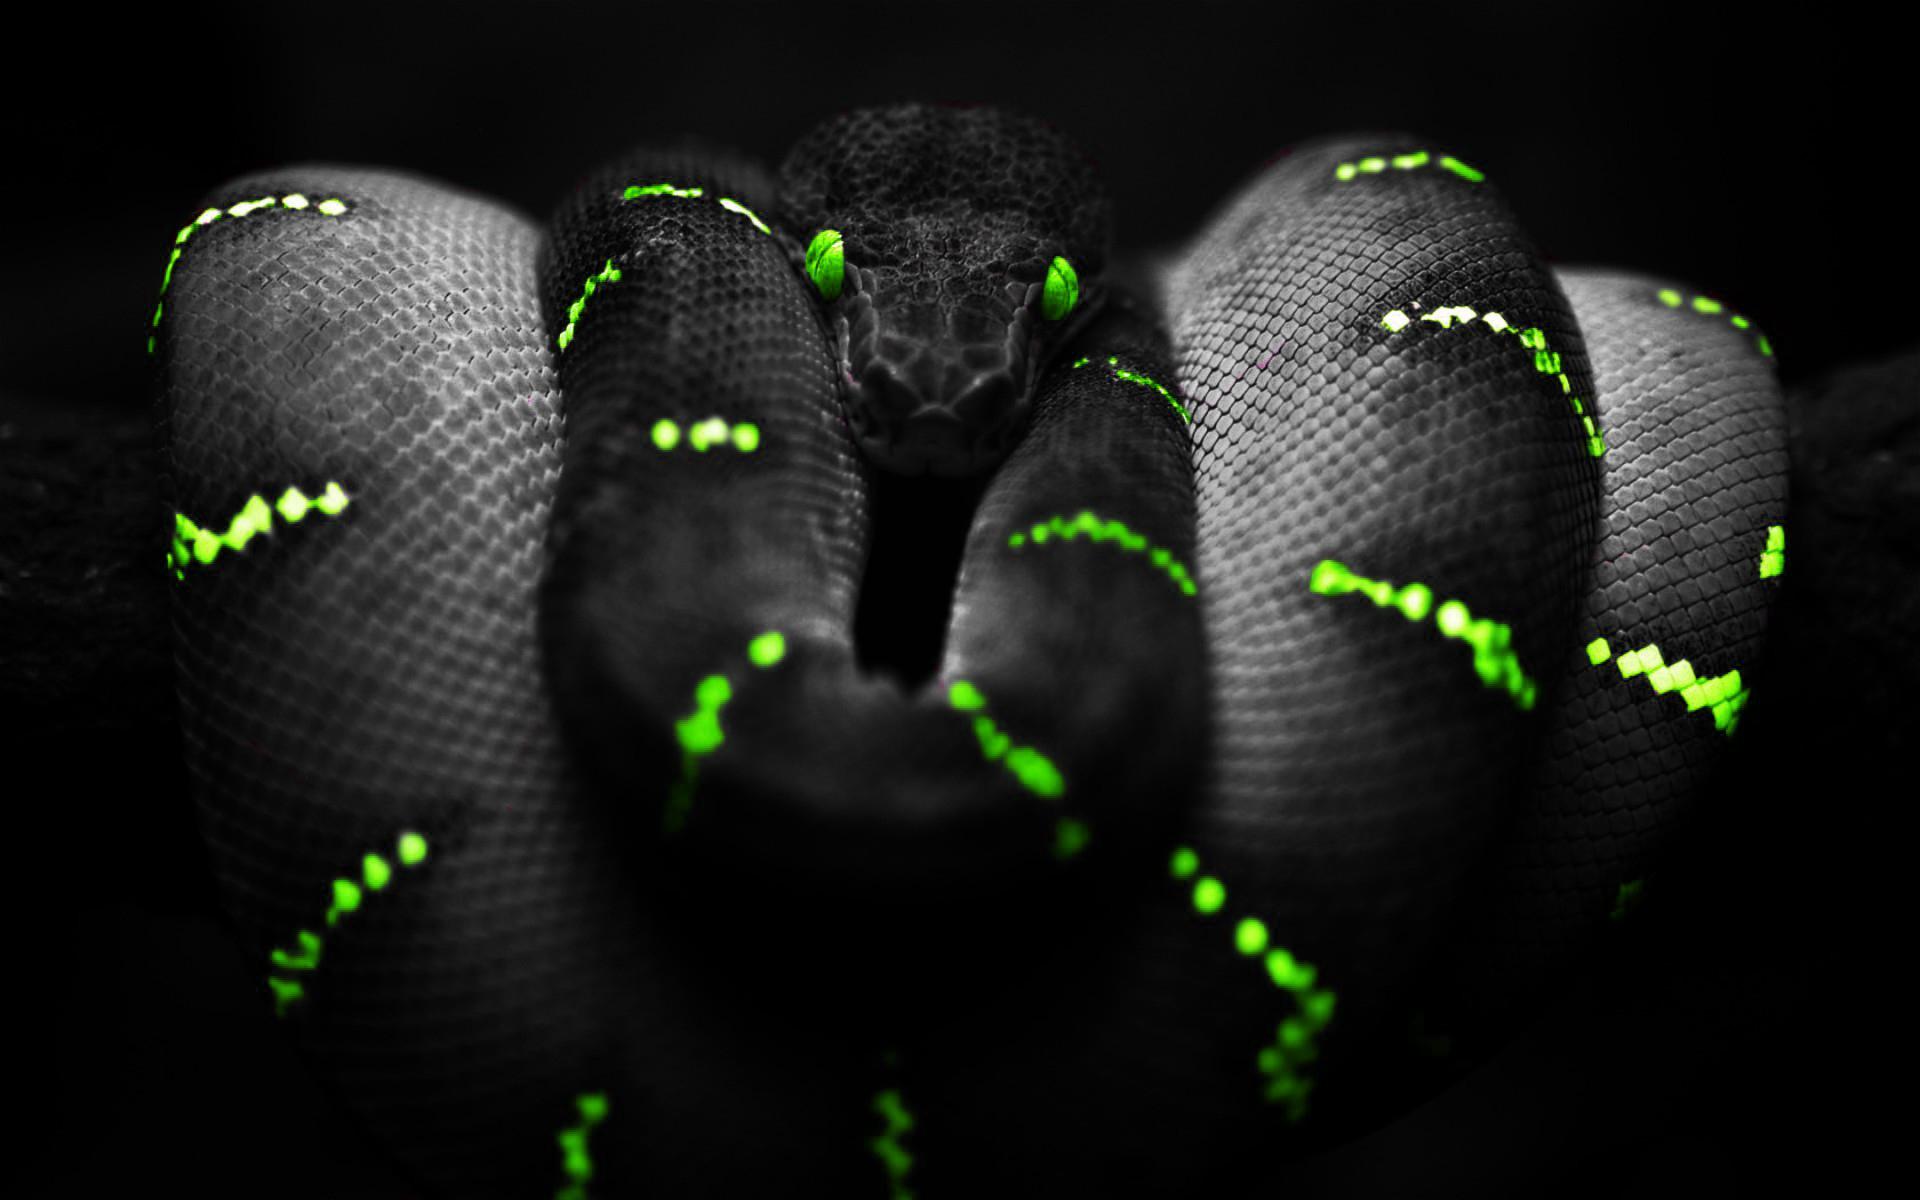 Neon Snake HD wallpaper for desktop [1920 x 1080]